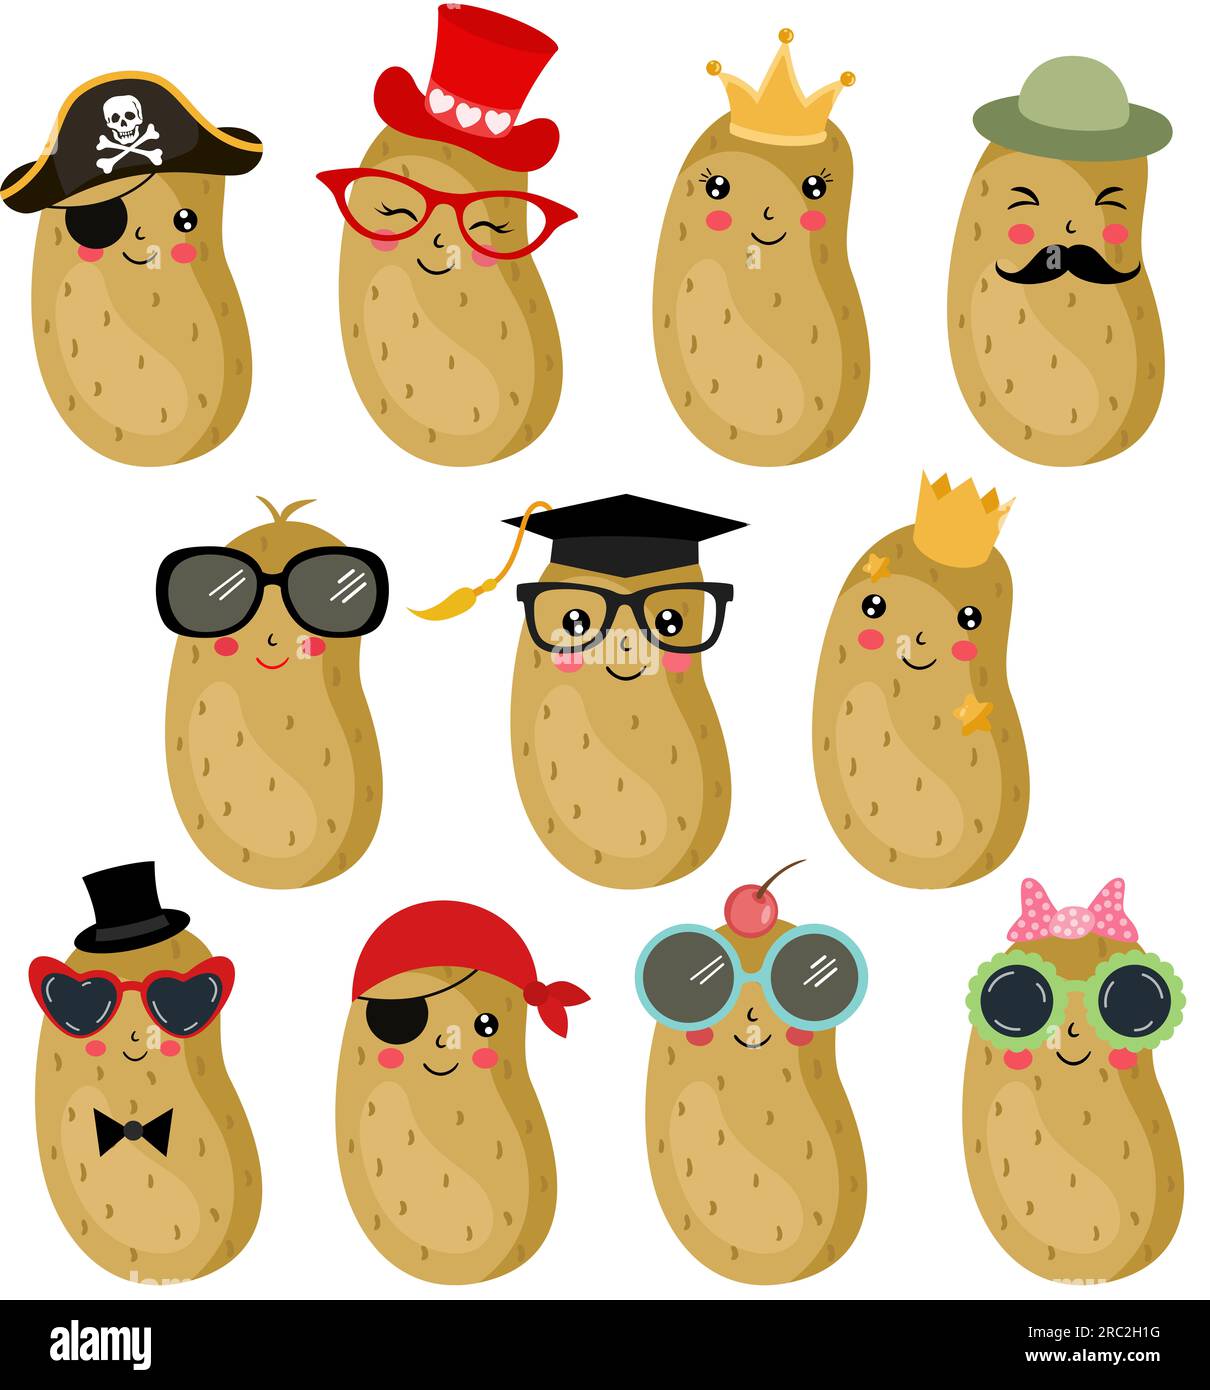 Set of funny potato mascot characters Stock Photo